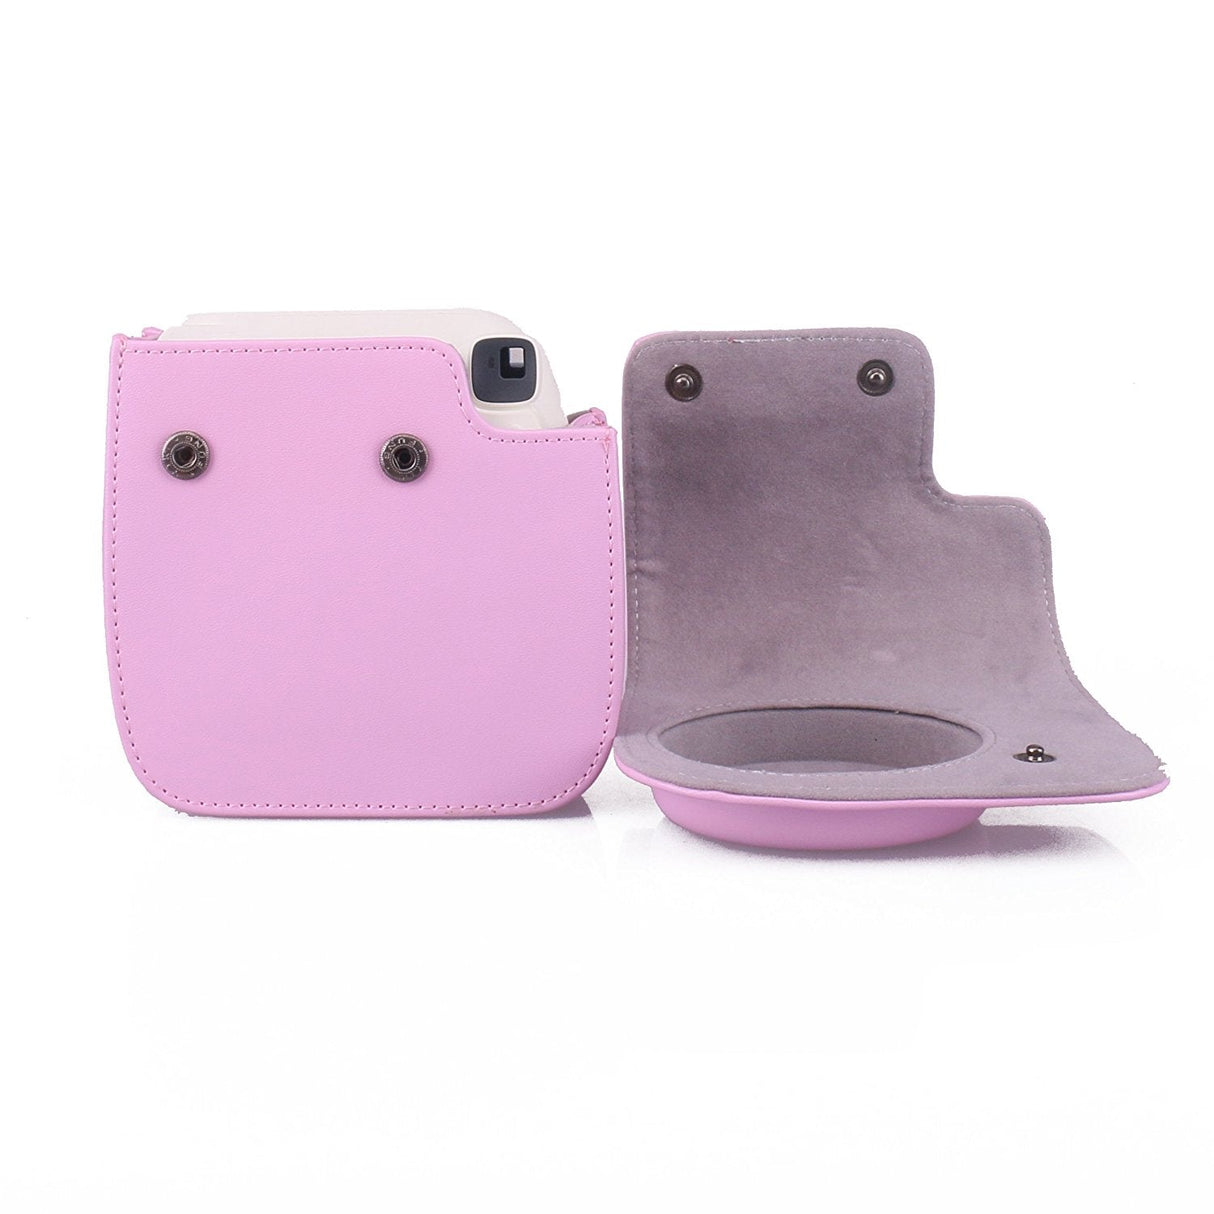 CAIUL Vintage PU Leather fuji mini case for Fujifilm Instax Mini 11/9/8 Case bag Pink